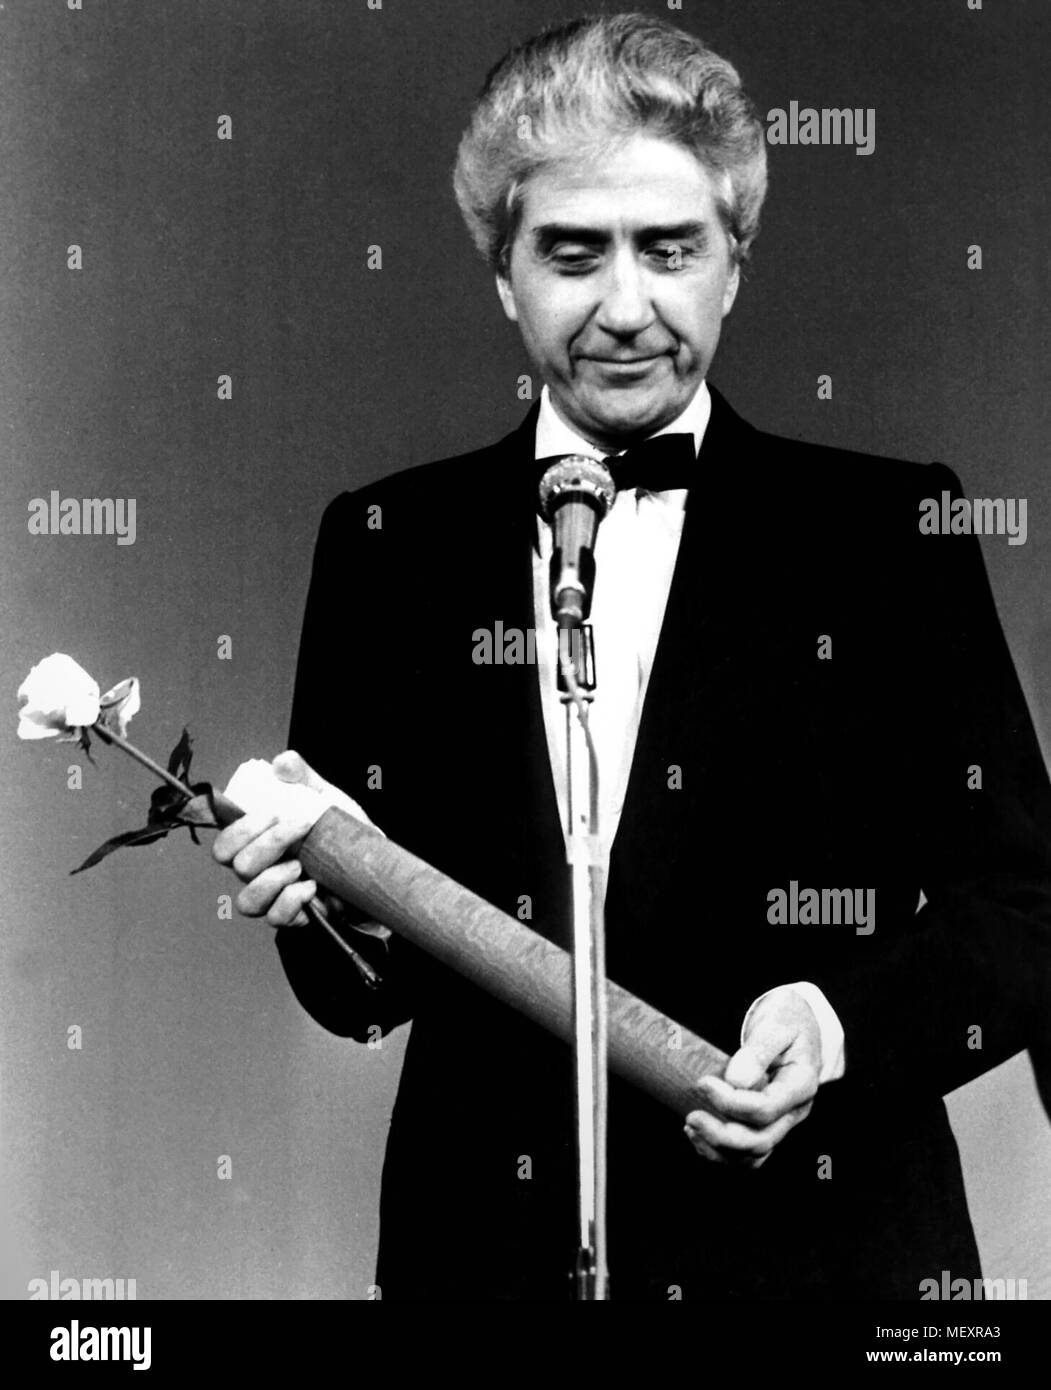 Regisseur Alain Resnais bei einer Preisverleihung für den Film " Mein Onkel aus Amerika aka. Mon oncle d'Amérique, Frankreich 1980". Director Alain Resnais at an award ceremony, France 1980 Stock Photo